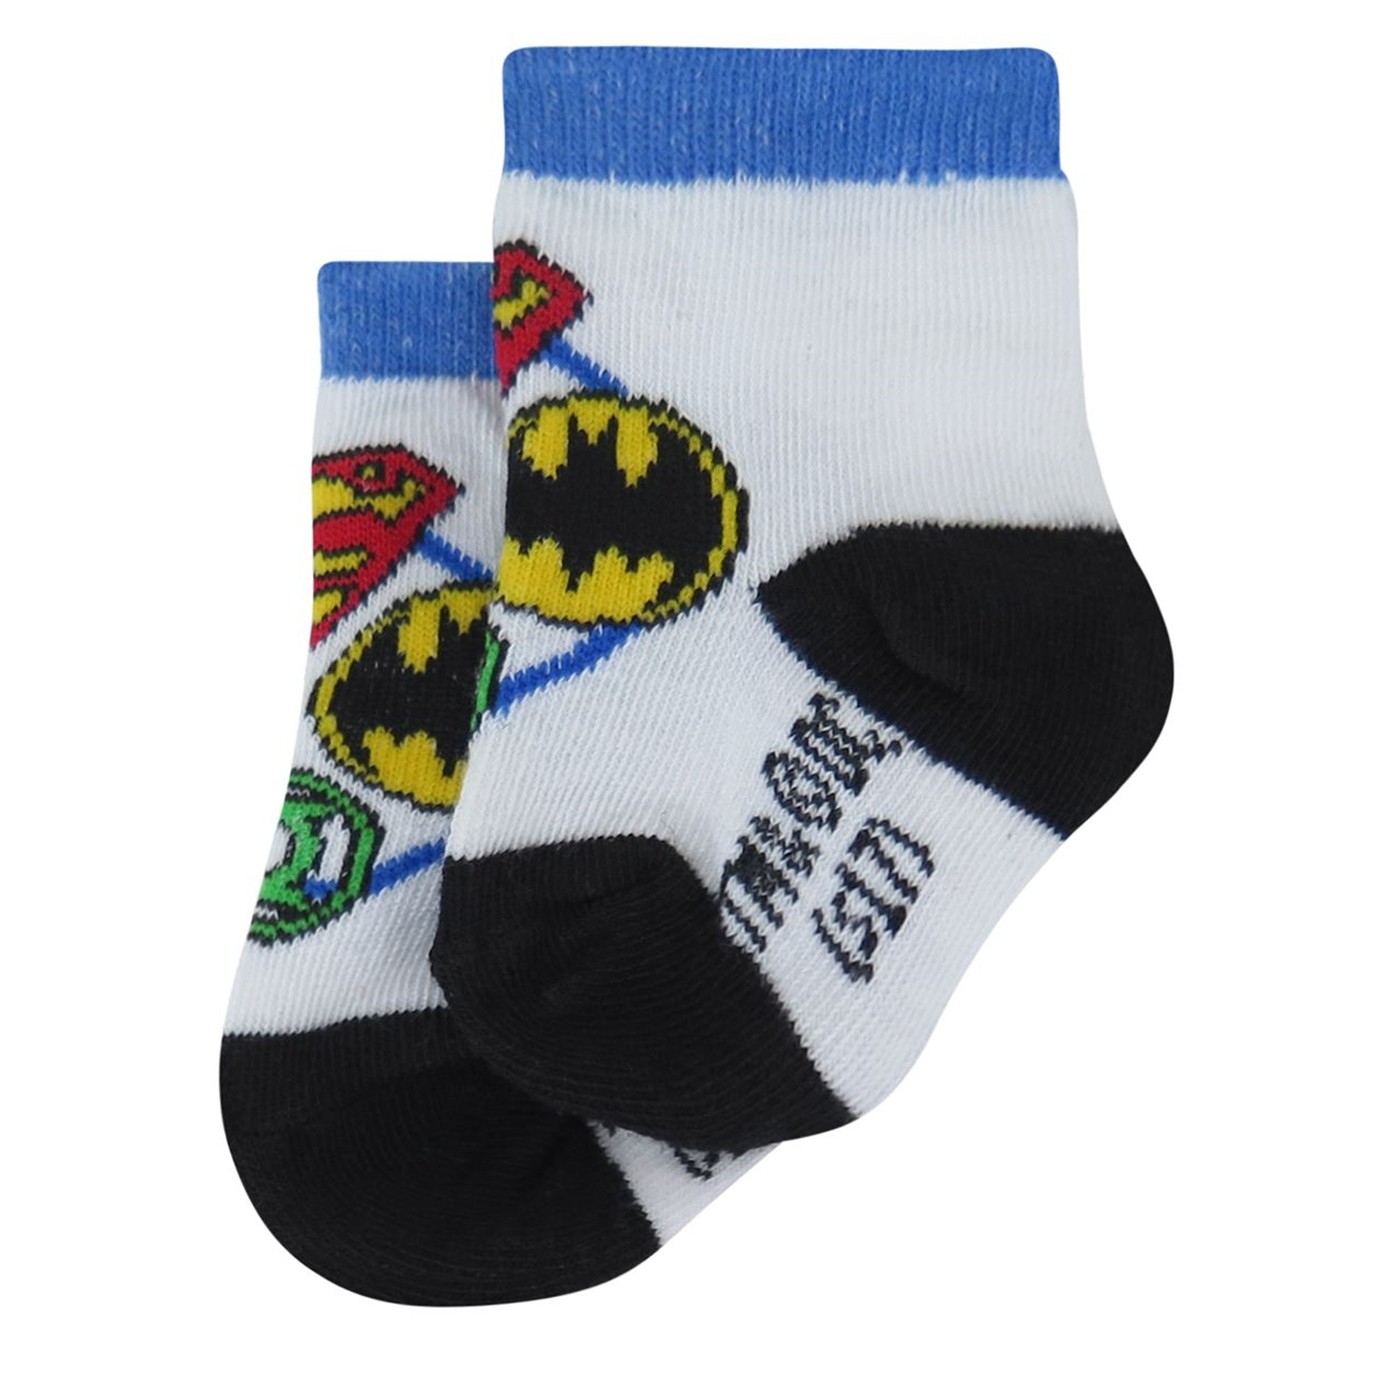 Justice League Symbols Infant Socks 6-Pack